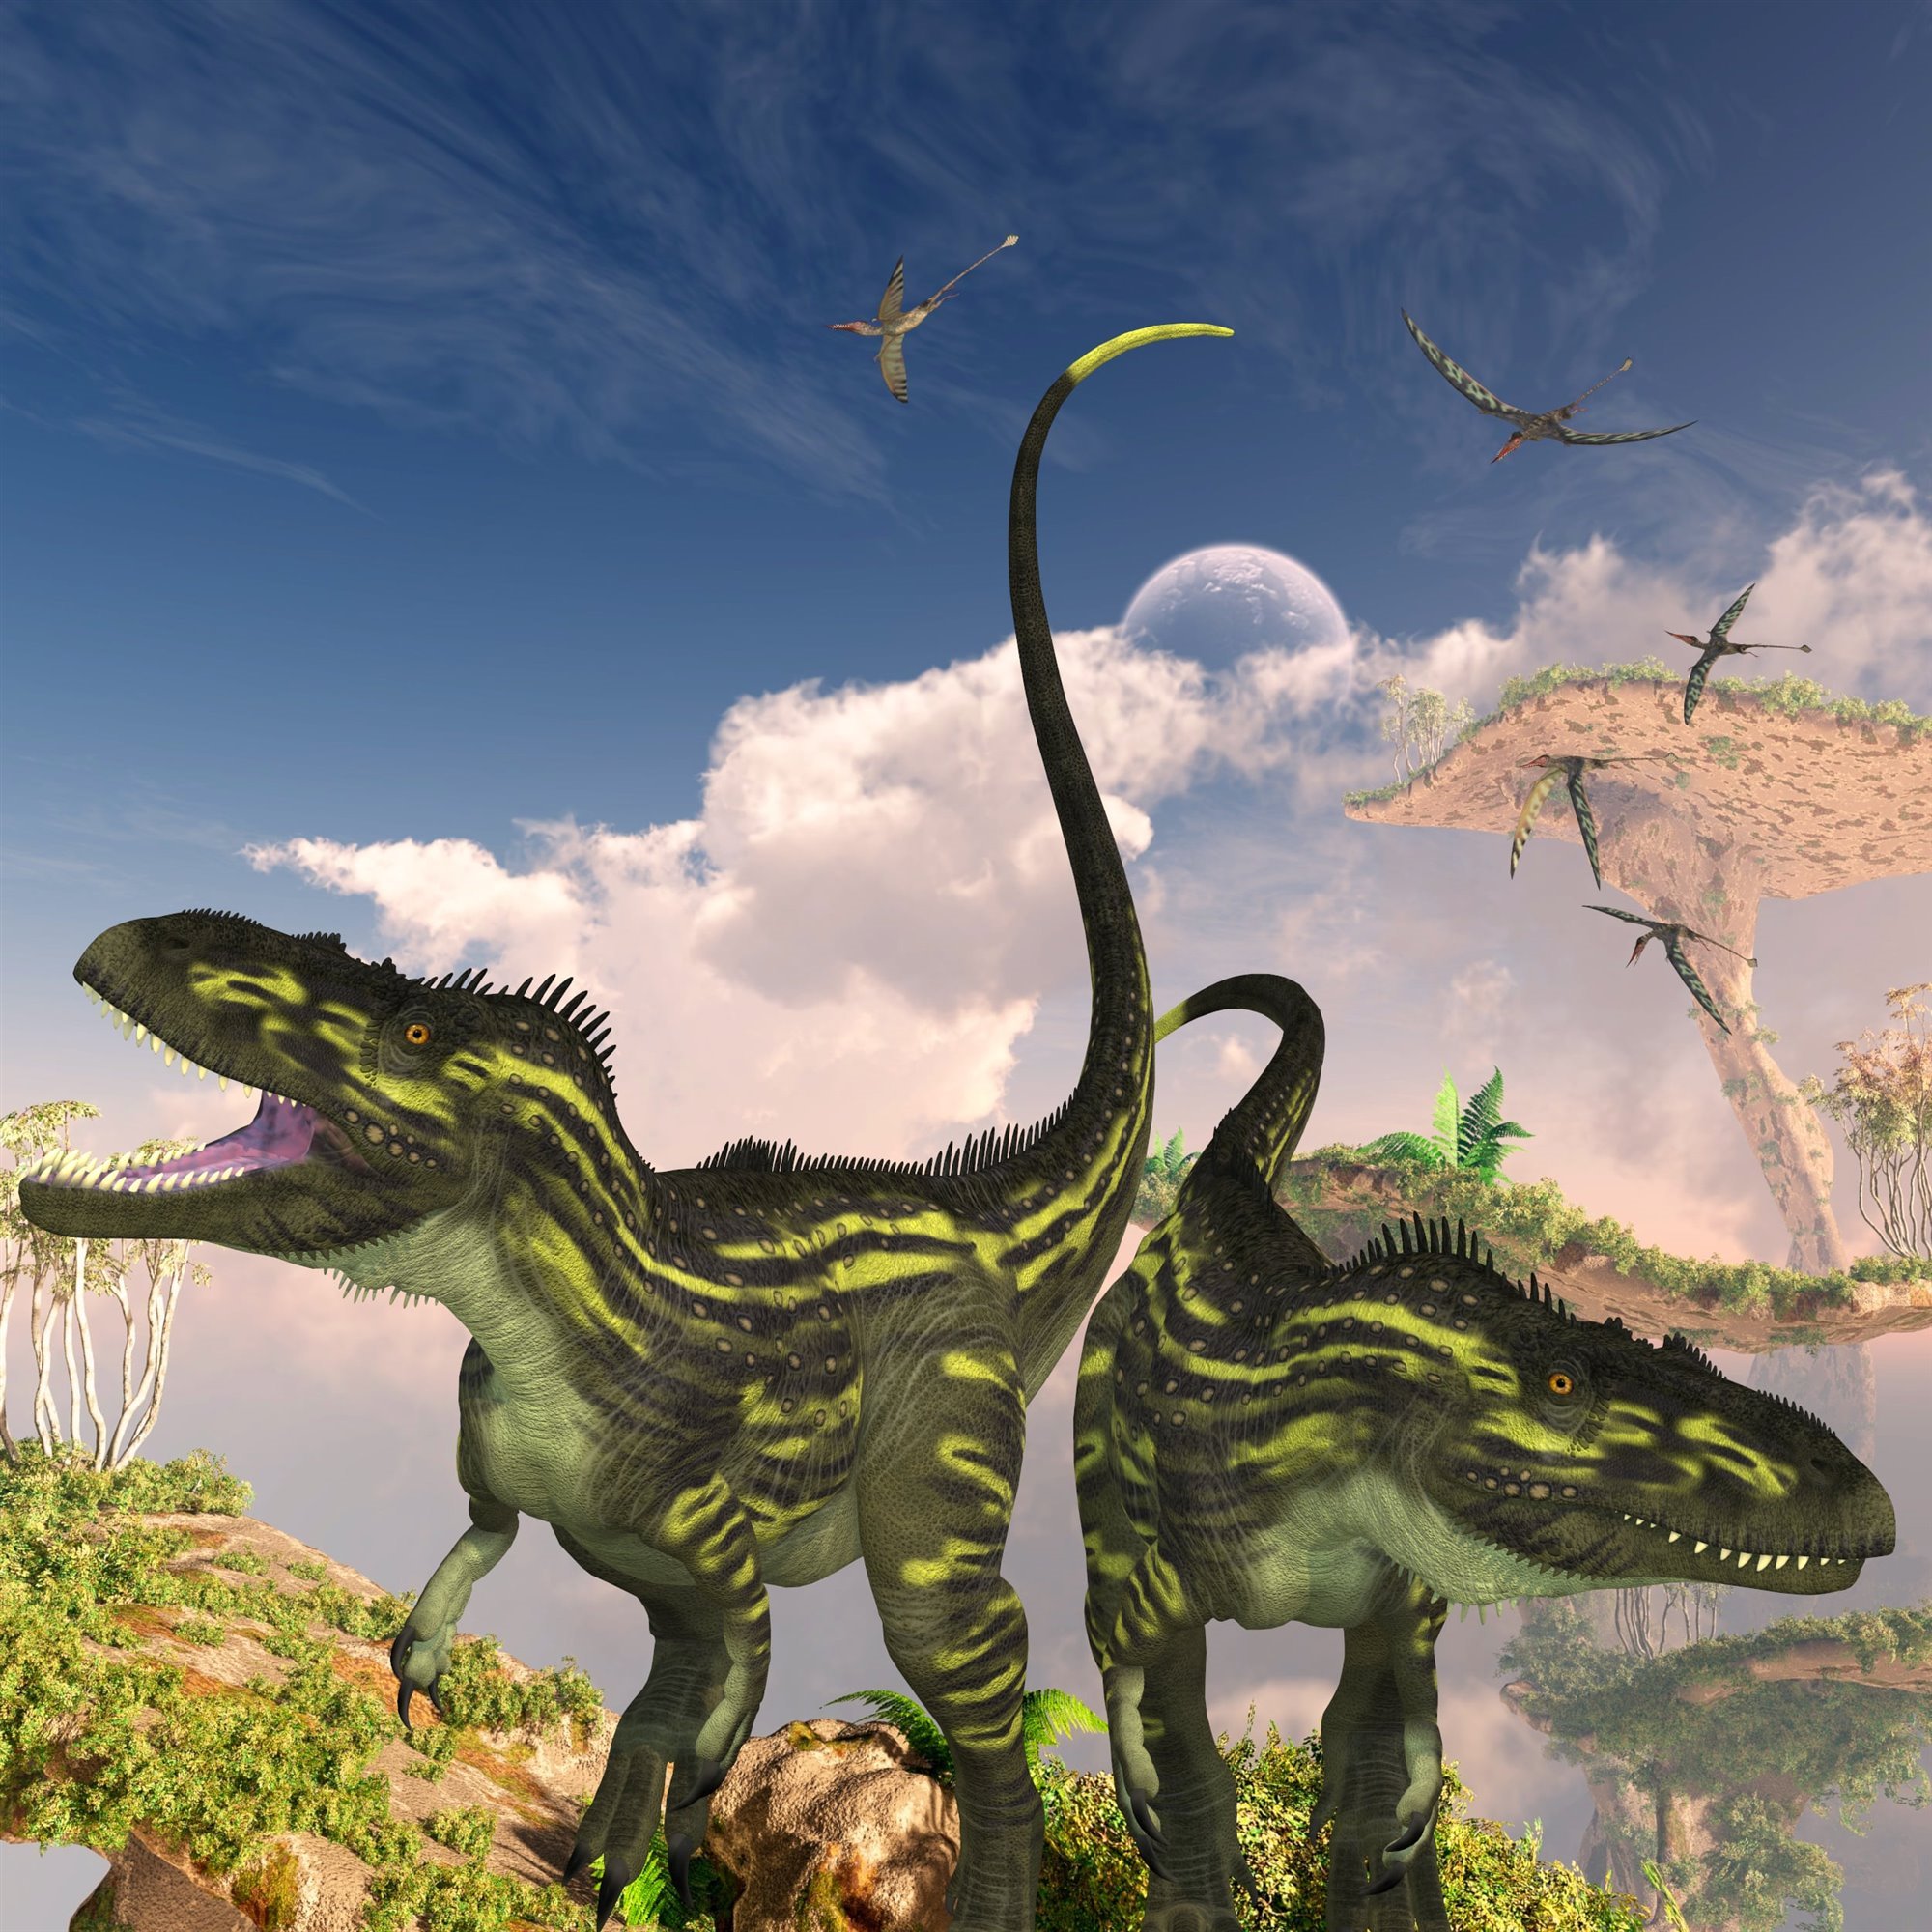 Torvosaurus gurneyi